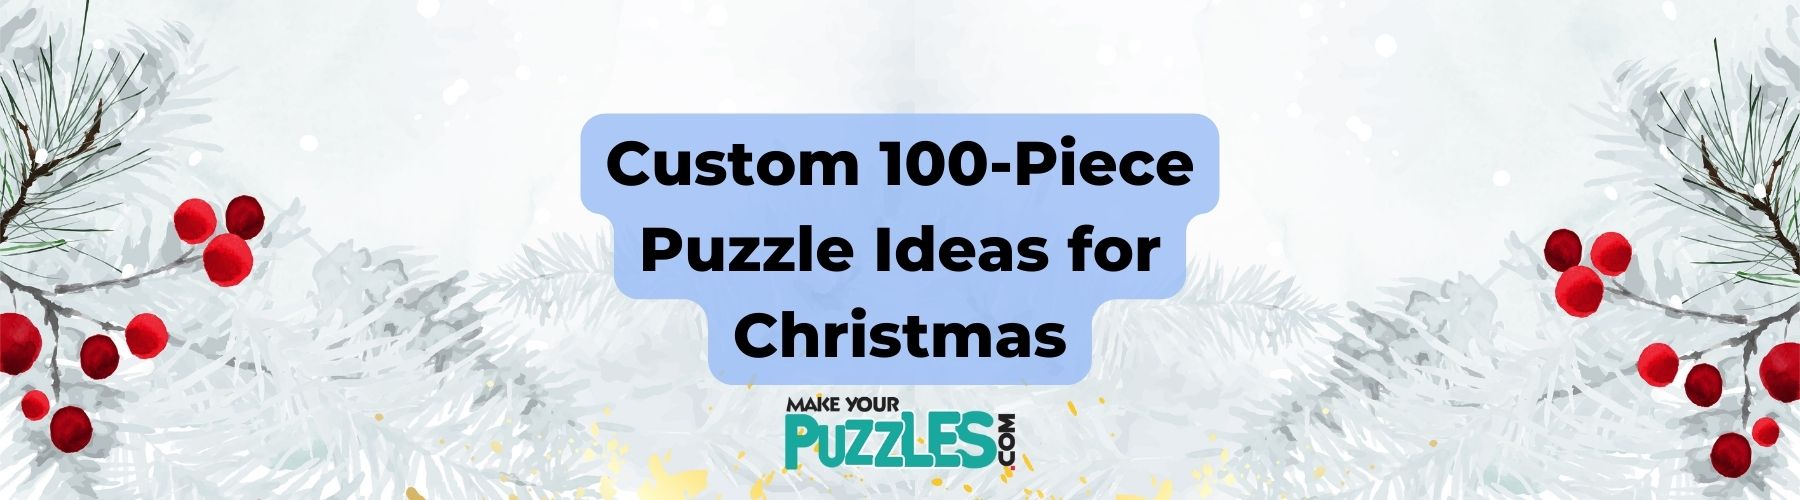 Custom 100-Piece Puzzle Ideas for Christmas | MakeYourPuzzles